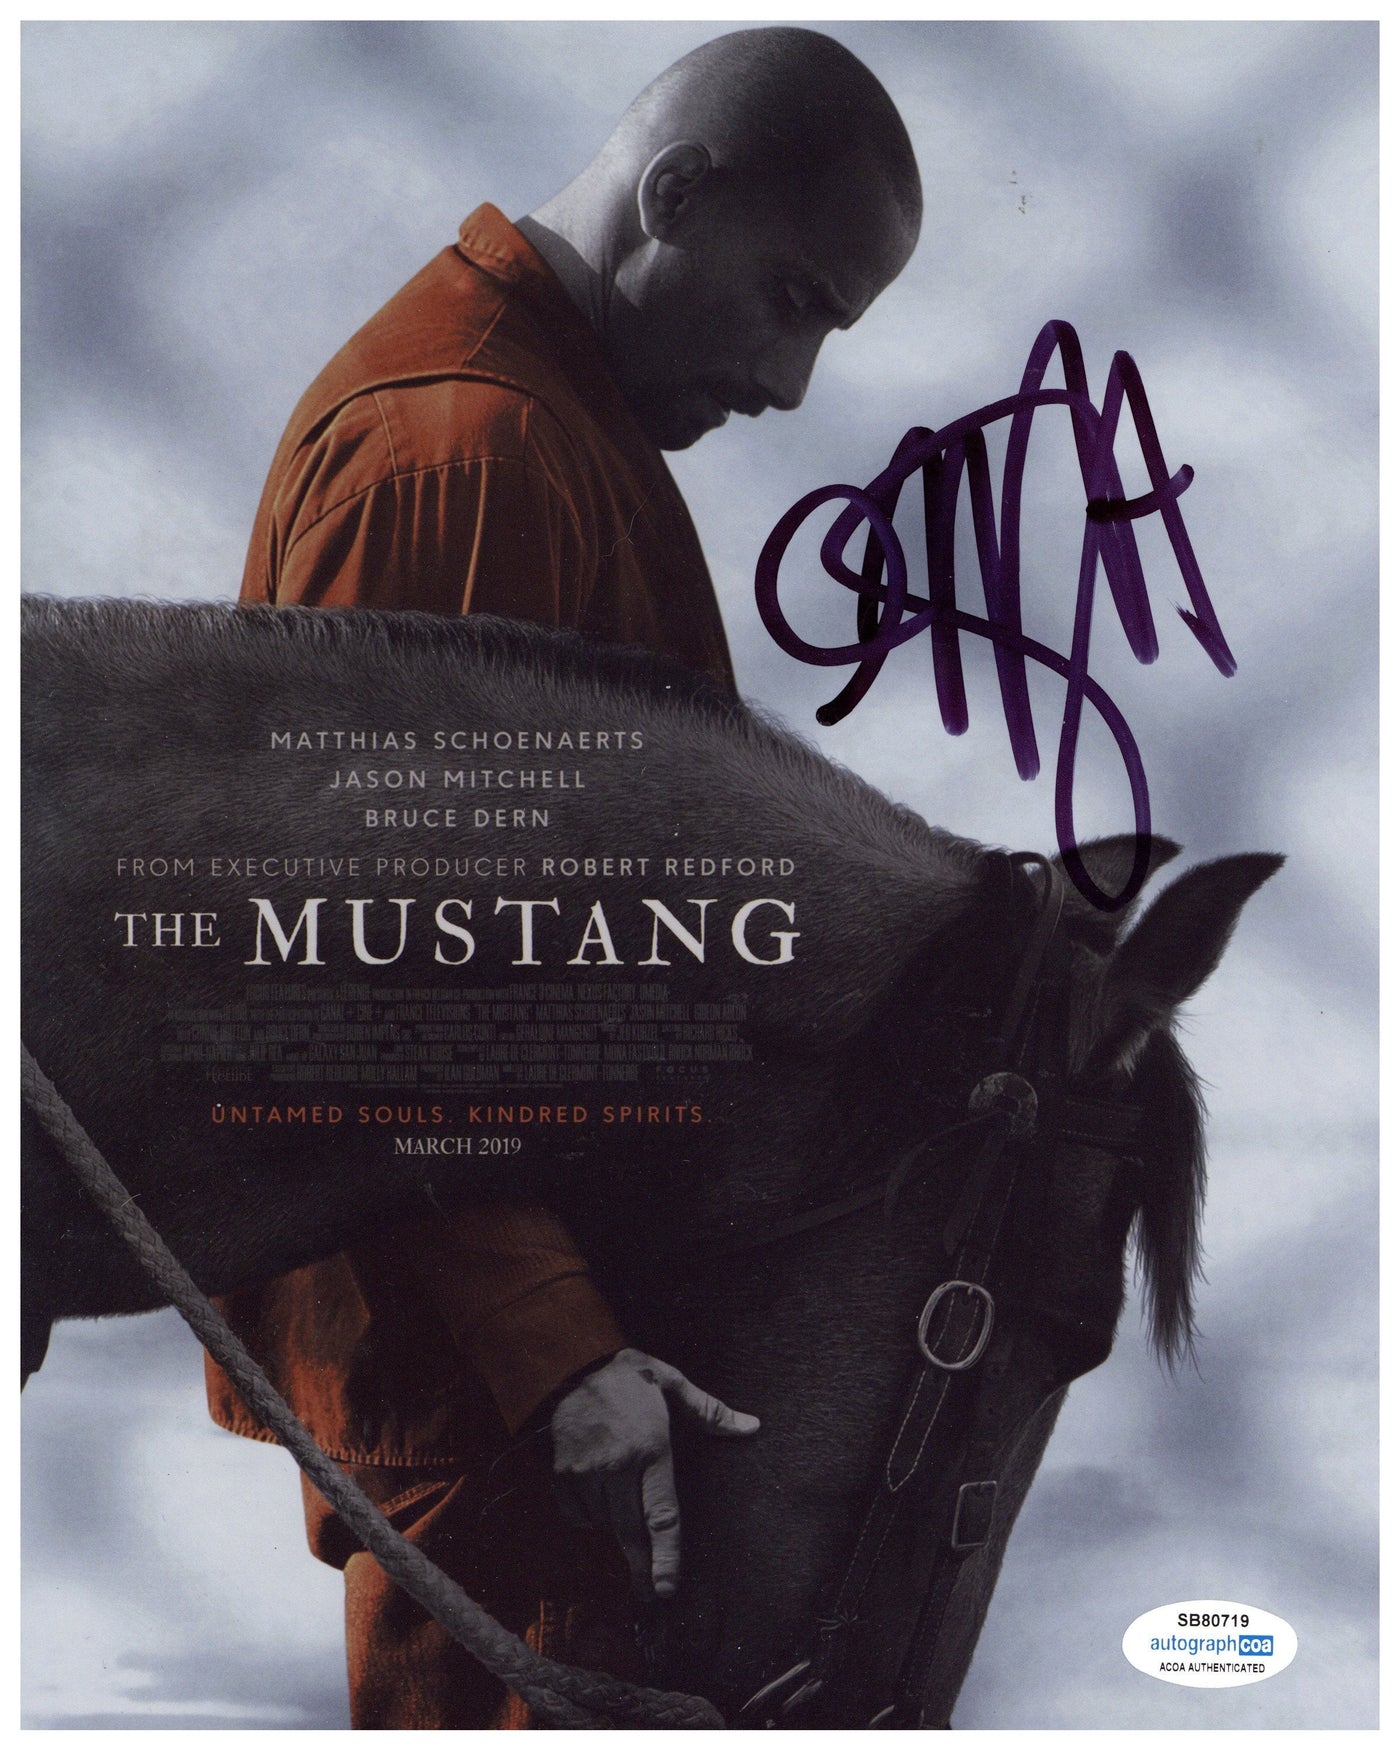 Matthias Schoenaerts Signed 8x10 Photo The Mustang Autographed ACOA